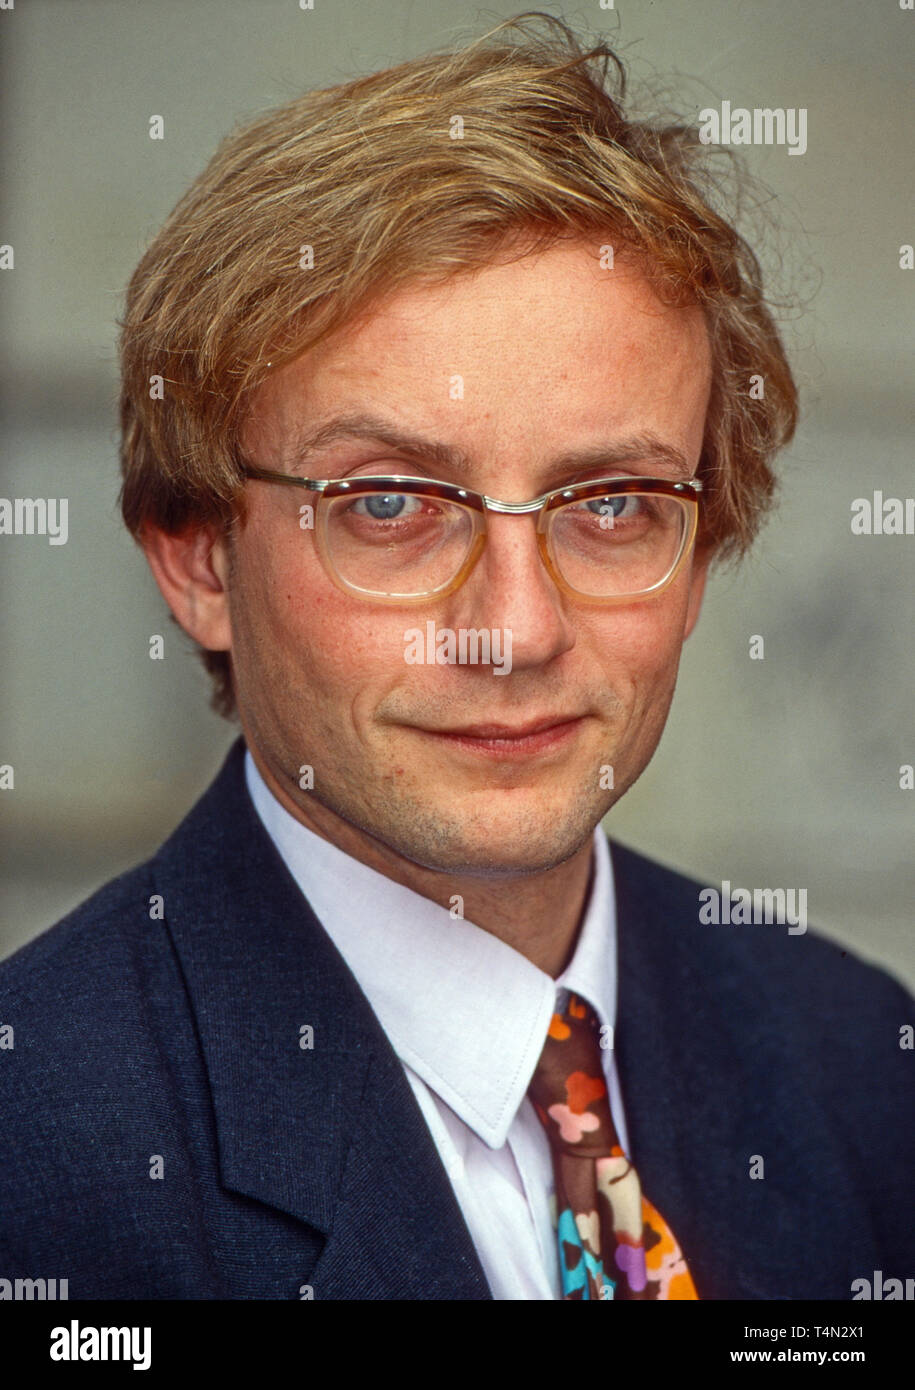 Wigald Komiker de désossage, acteurs et actrices, deutscher und Deutschland 1999. Comédien et acteur allemand Wigald Désossage, Allemagne 1999. Banque D'Images